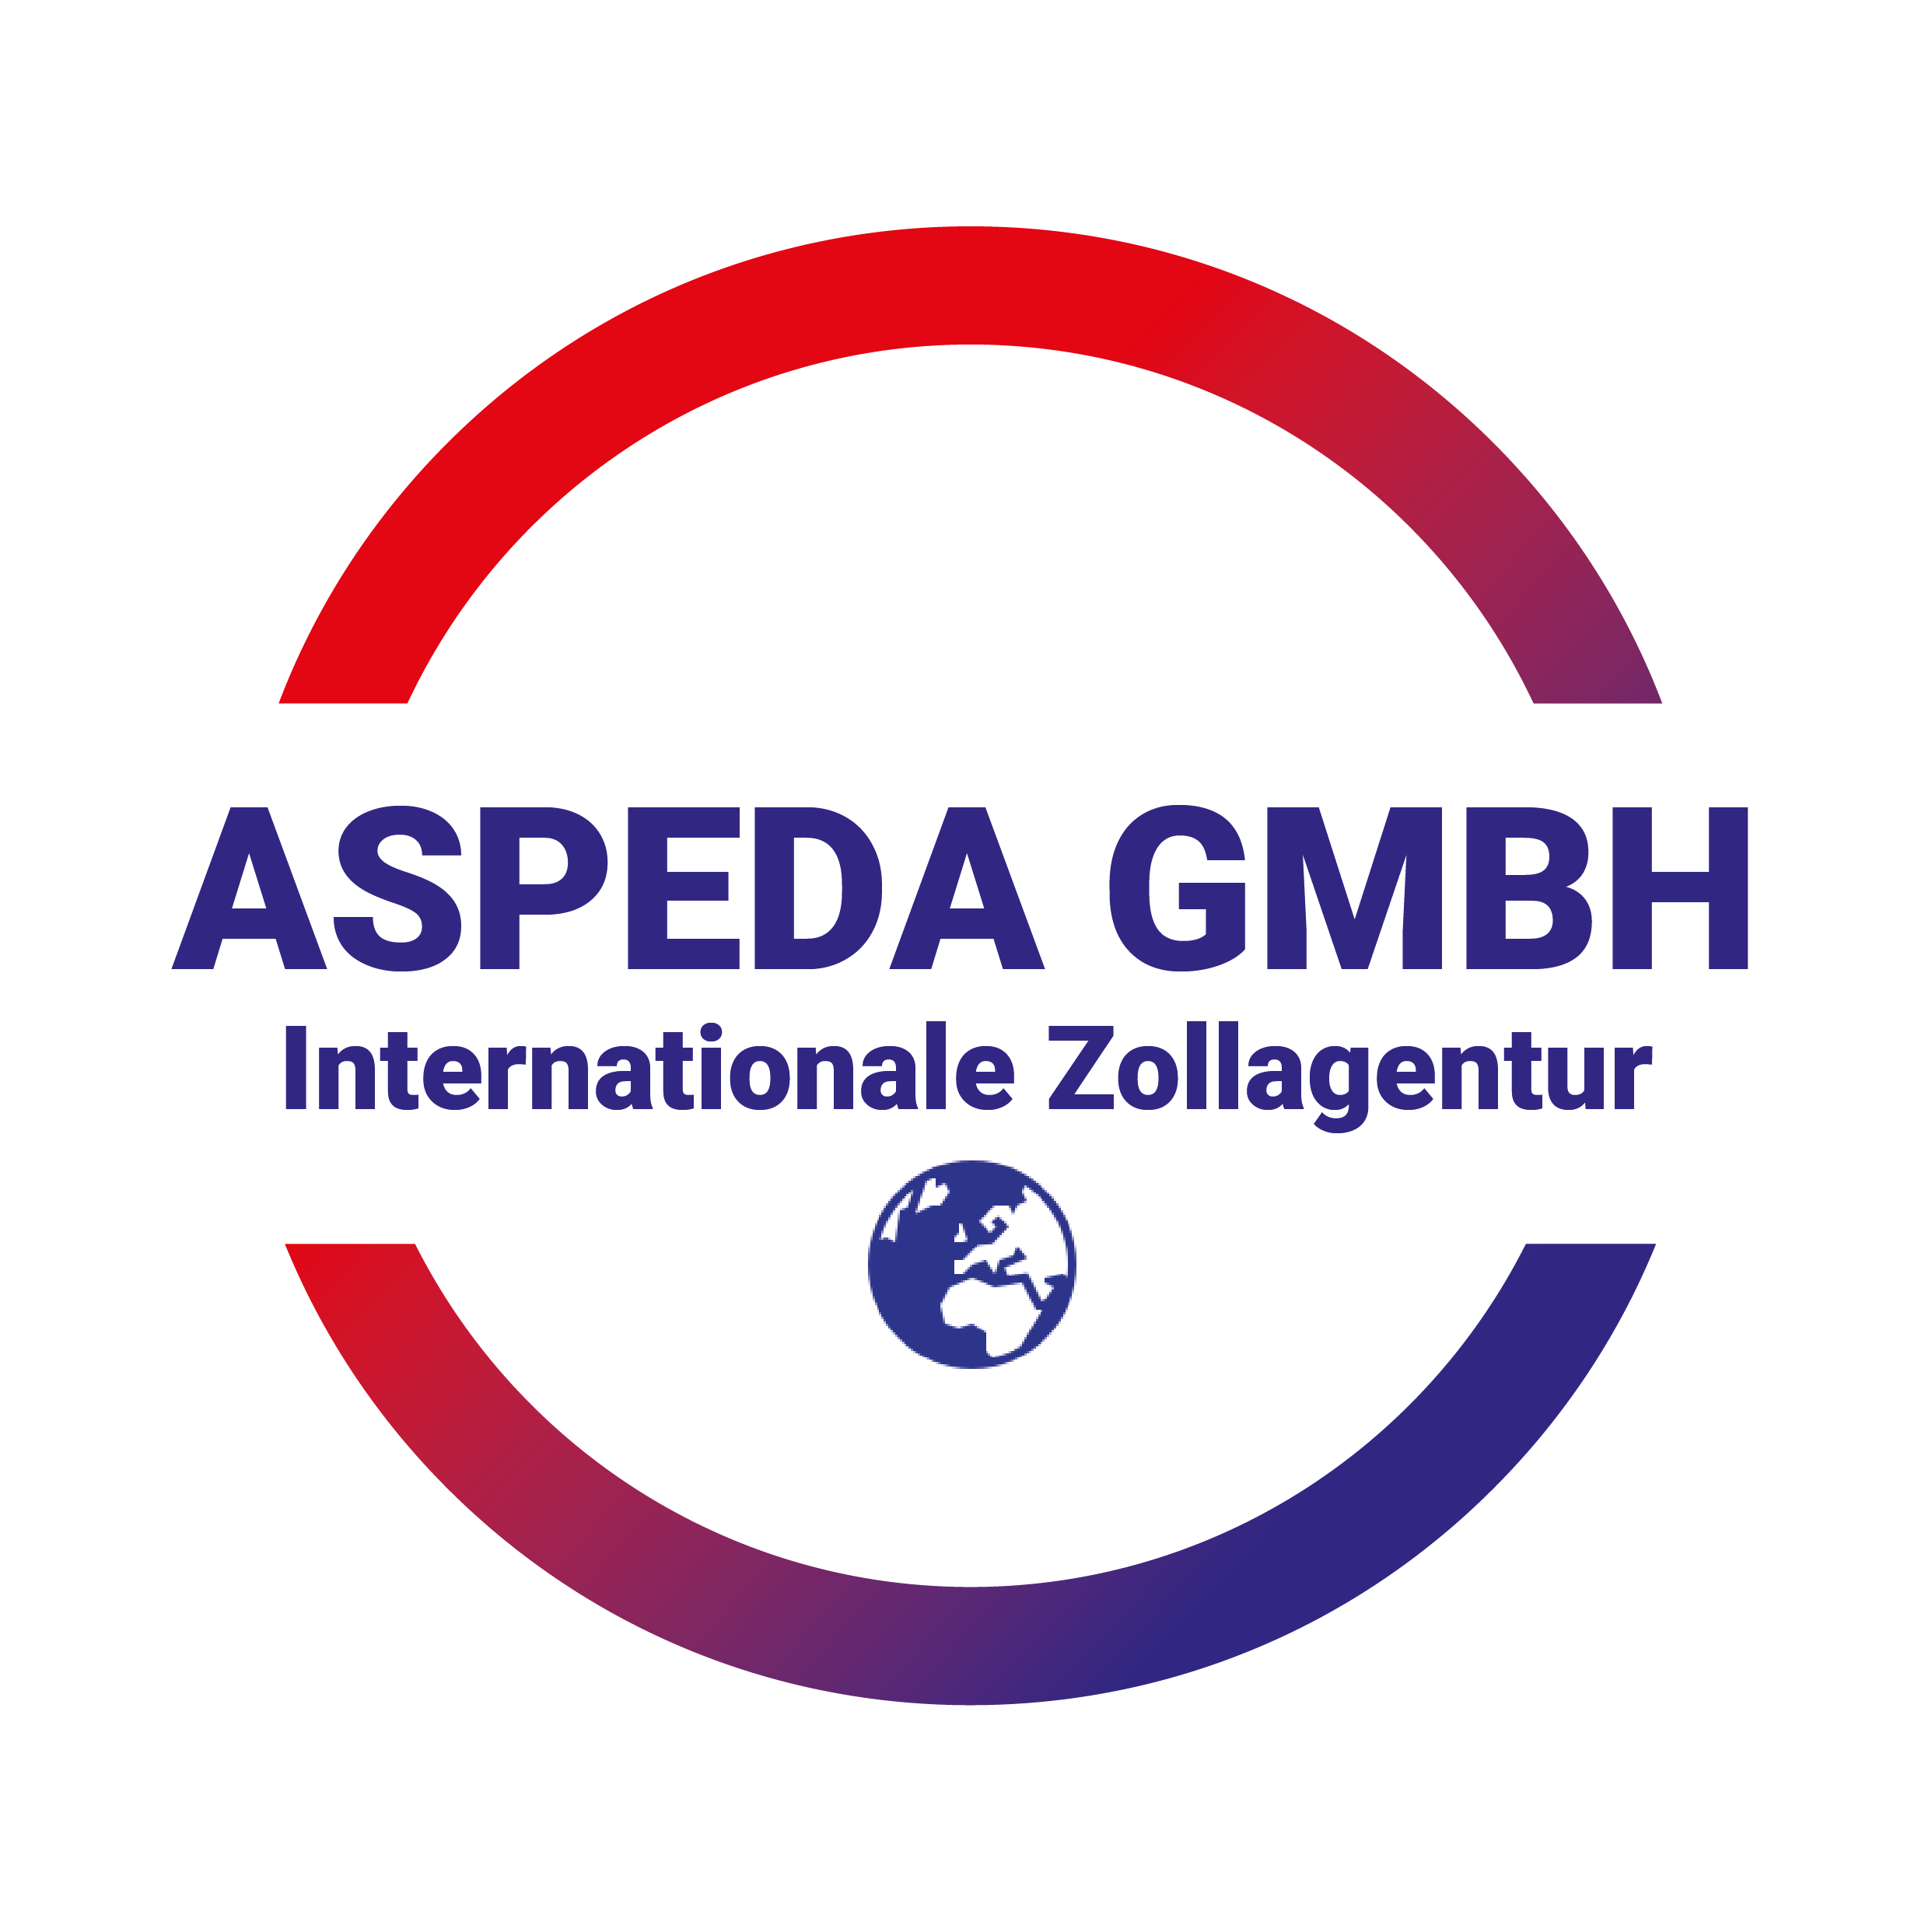 Aspeda GmbH Logo